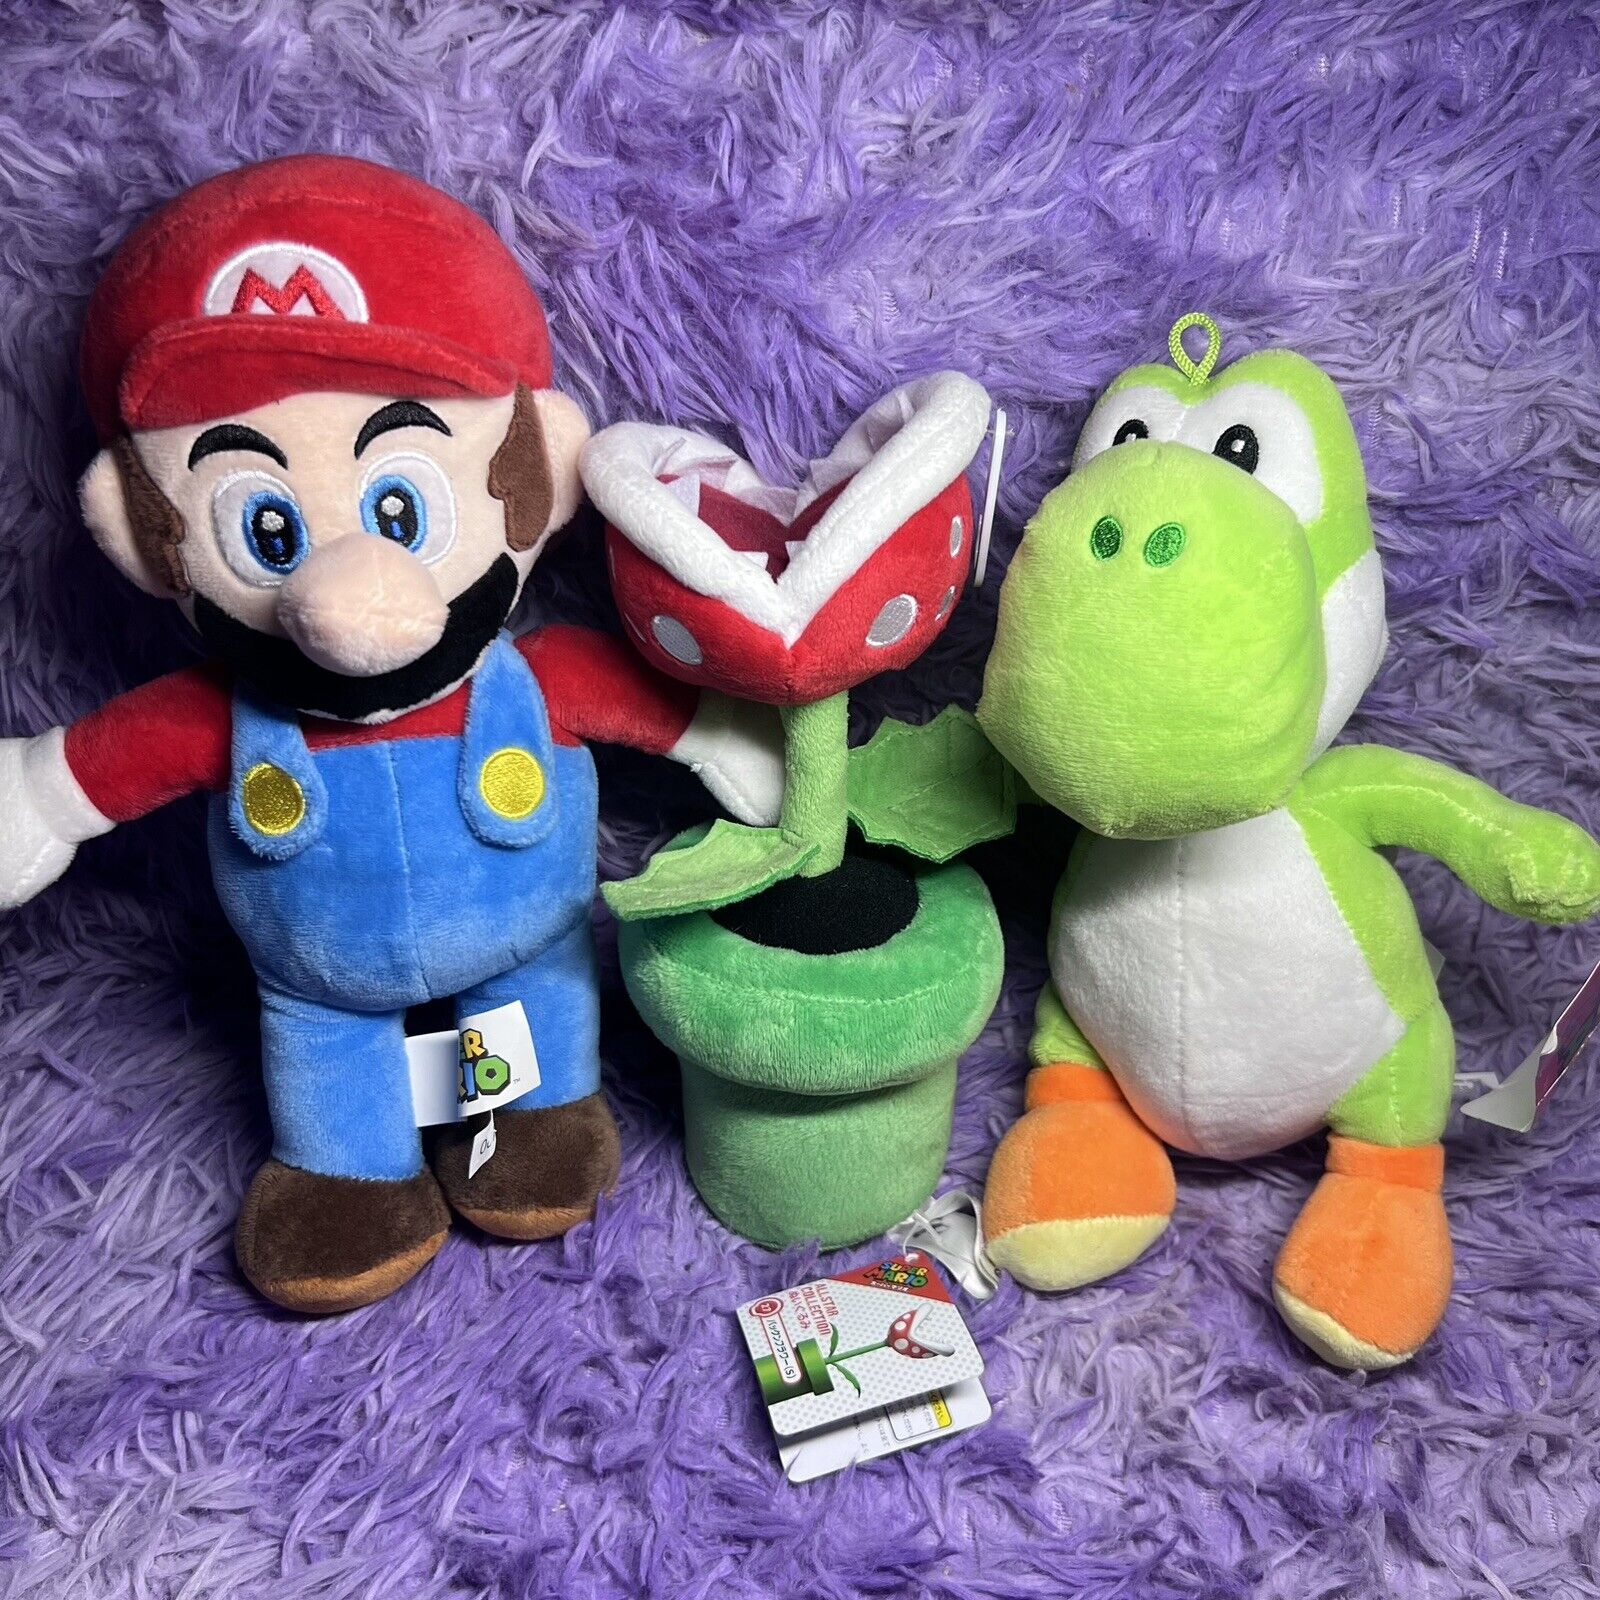 Lot of 3 Super Mario Plush Toys - Yoshi, Mario and Piranha Plant